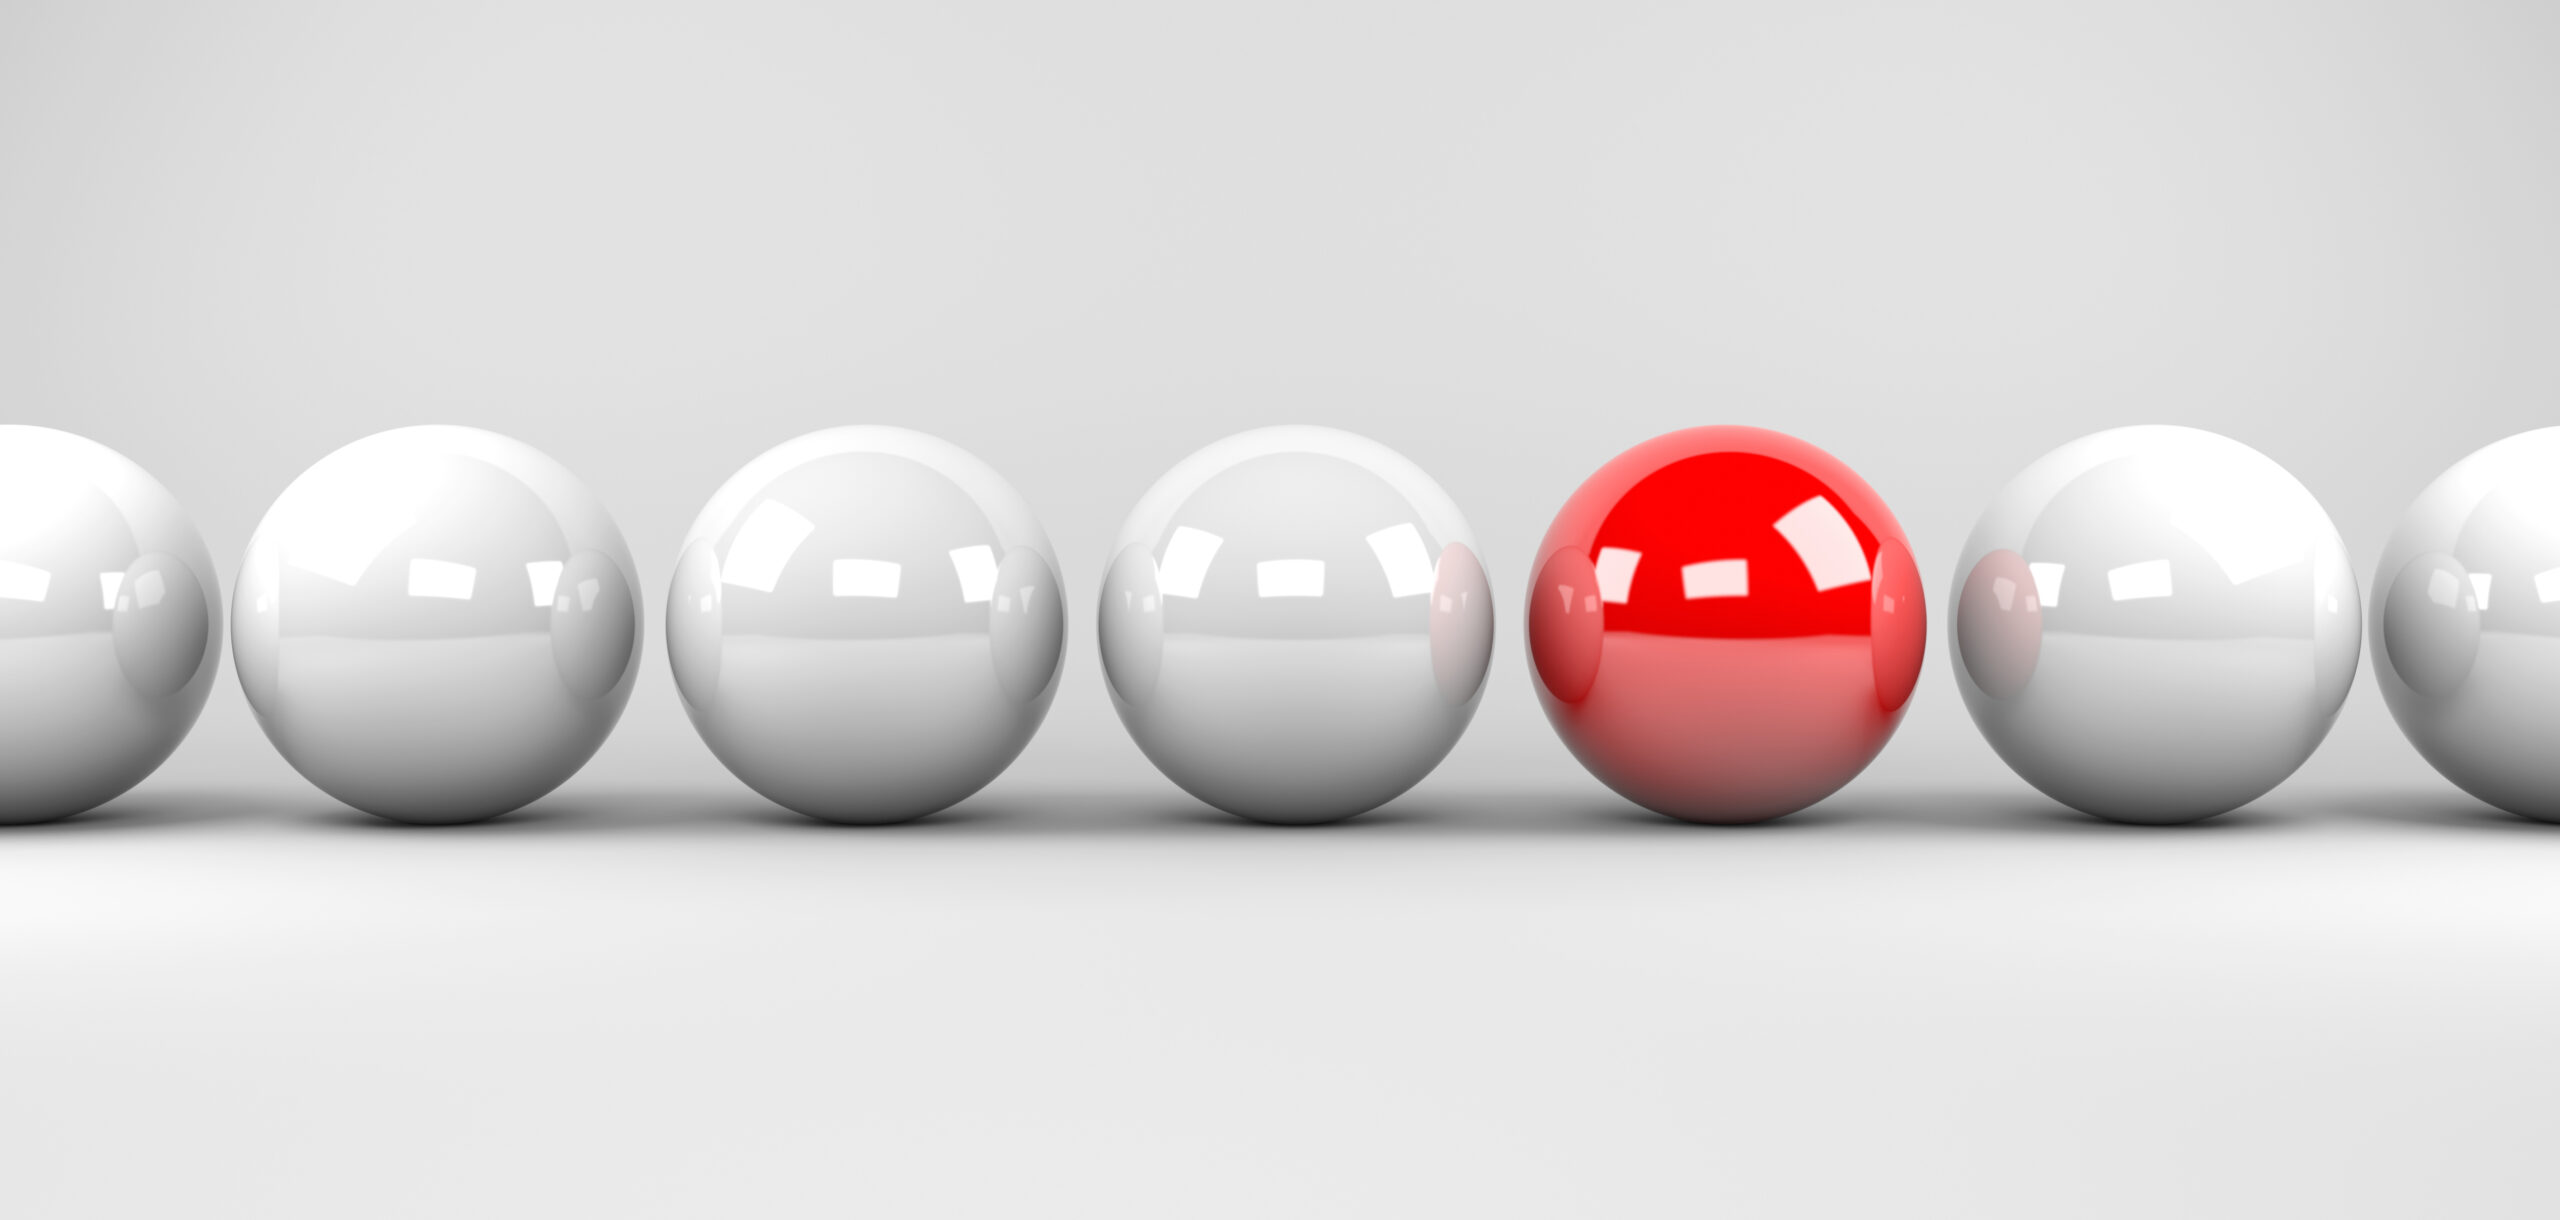 3d render illustration - red sphere stands out